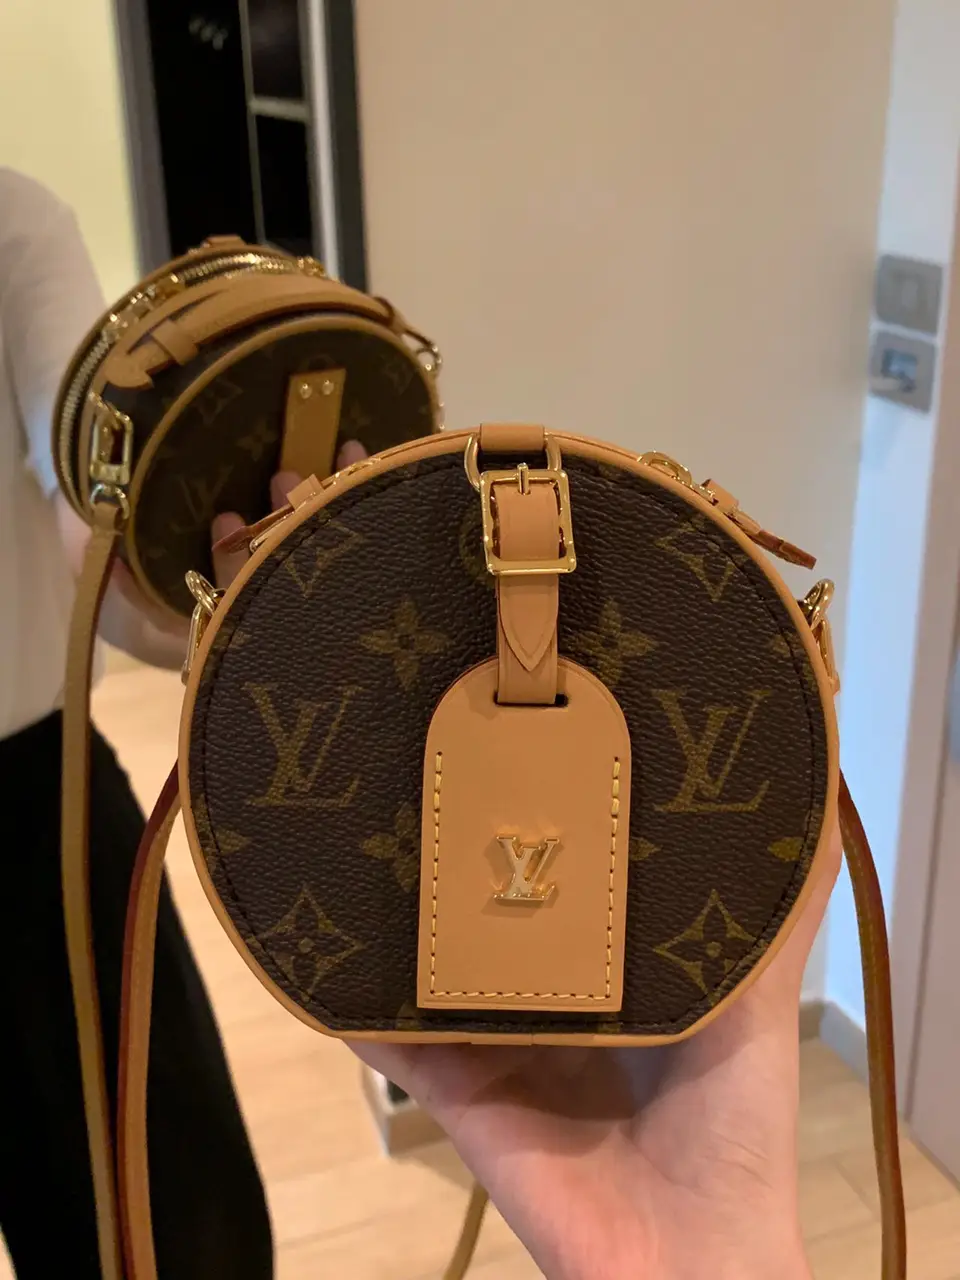 First Louis Vuitton bag Mini Boite Chapeau part of me wants to